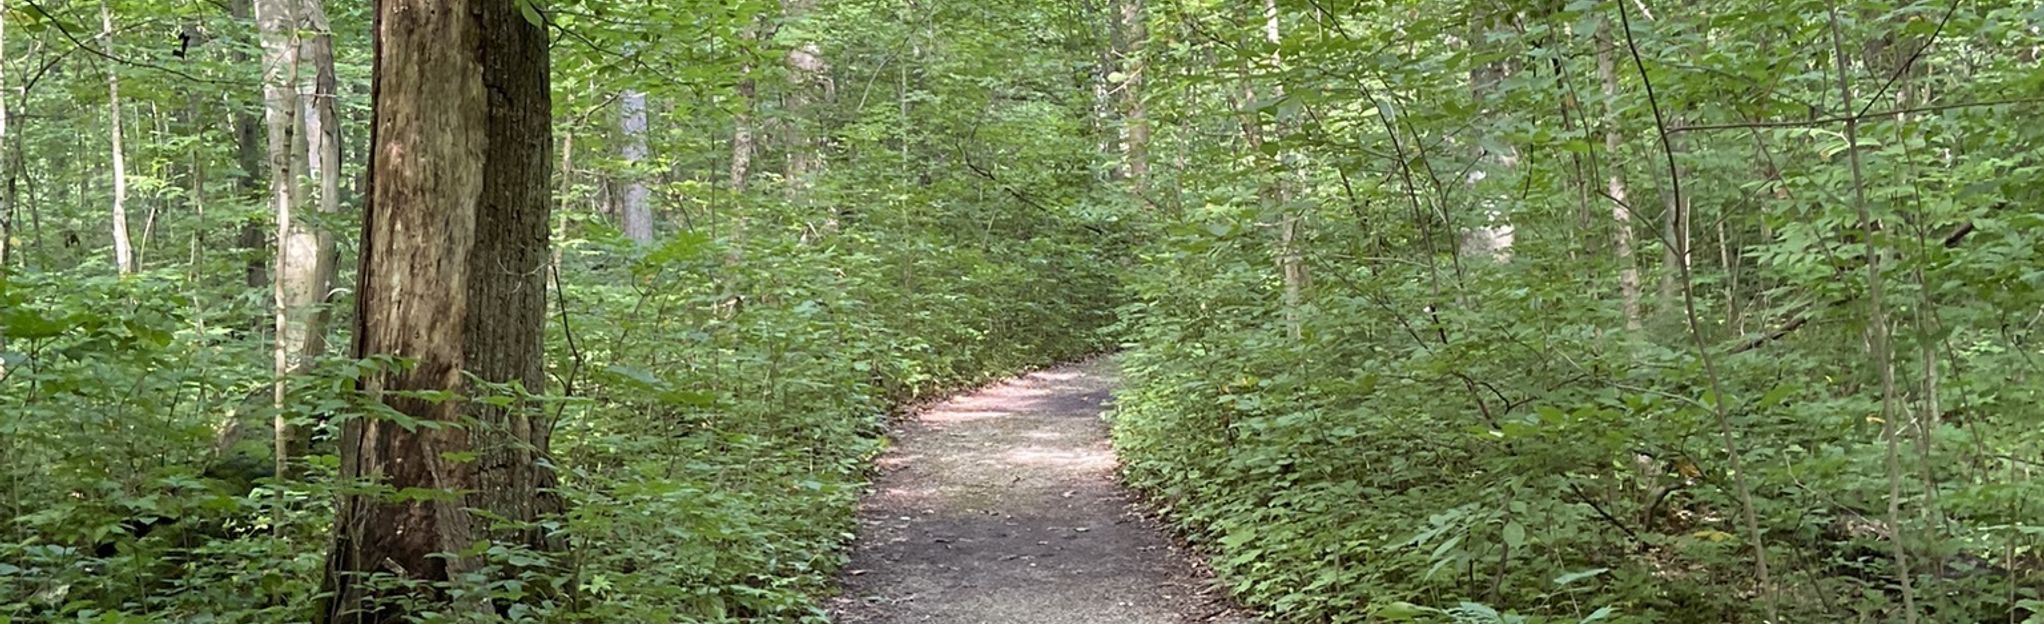 Goll Woods Nature Preserve Loop: 100 Reviews, Map - Ohio | AllTrails